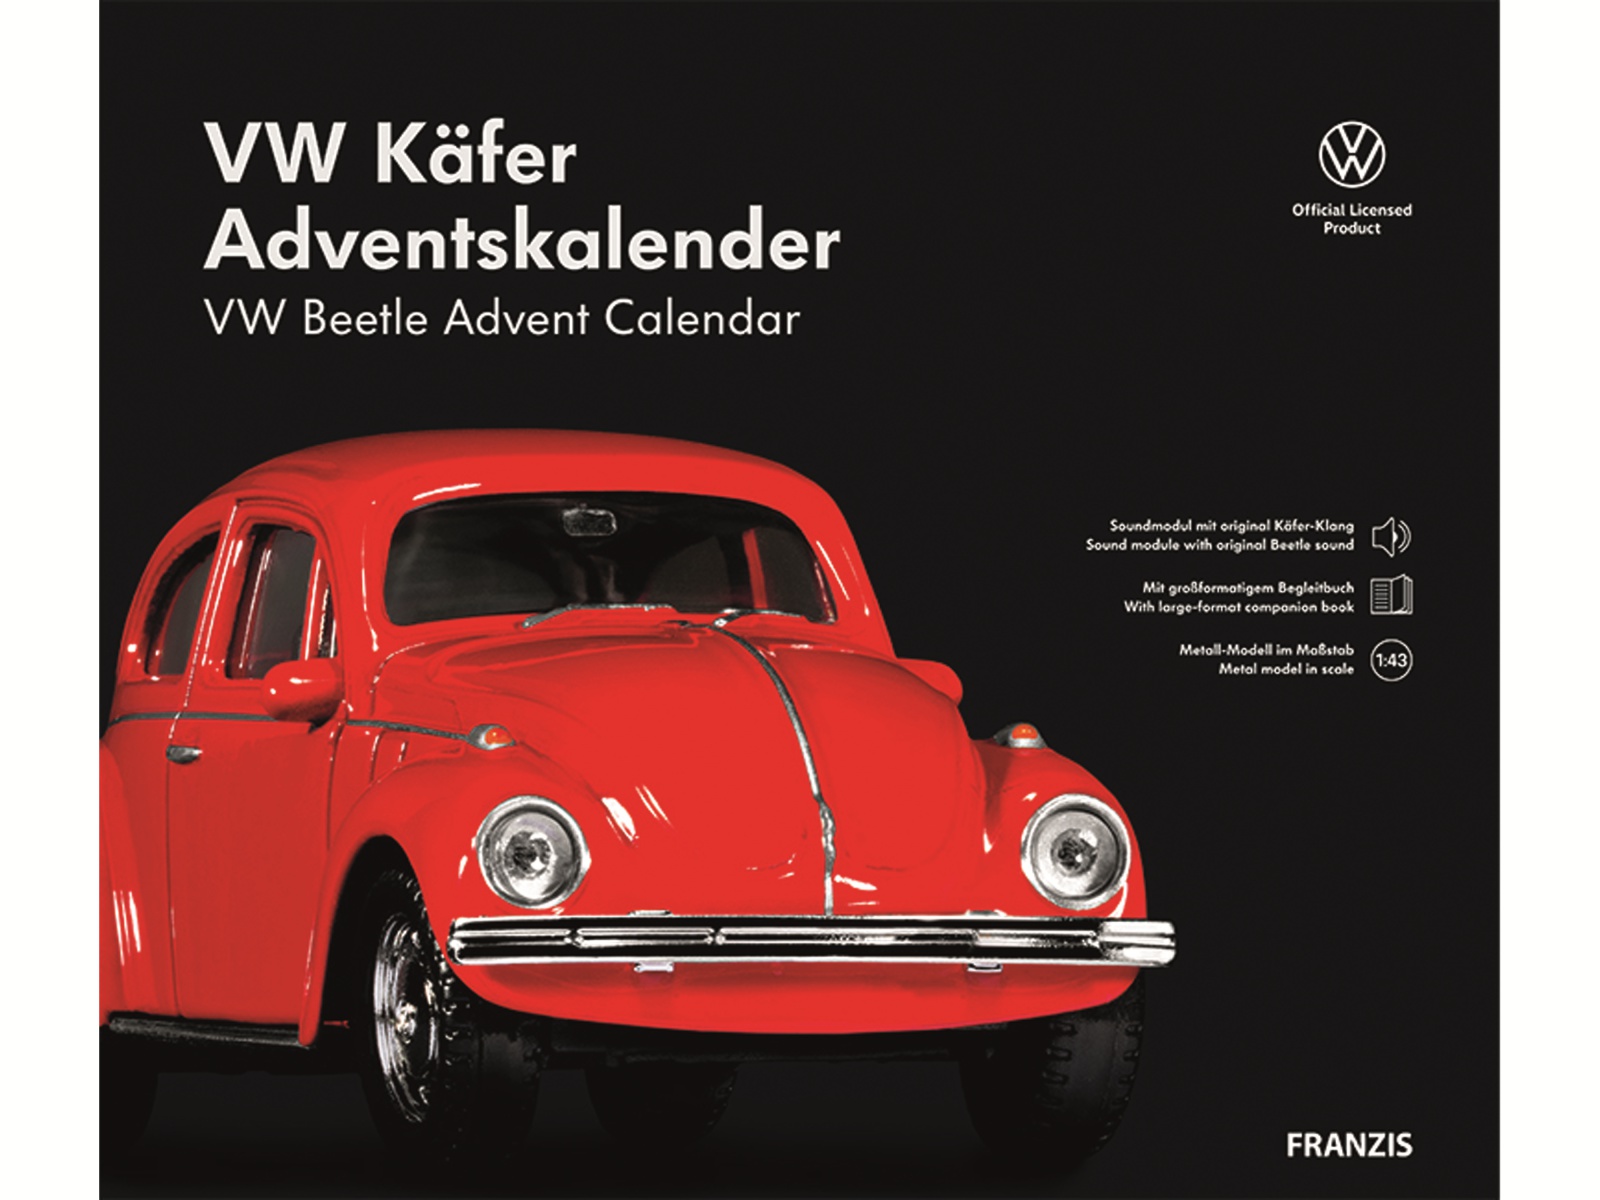 FRANZIS Adventskalender, 55255, VW Käfer Adventskalender